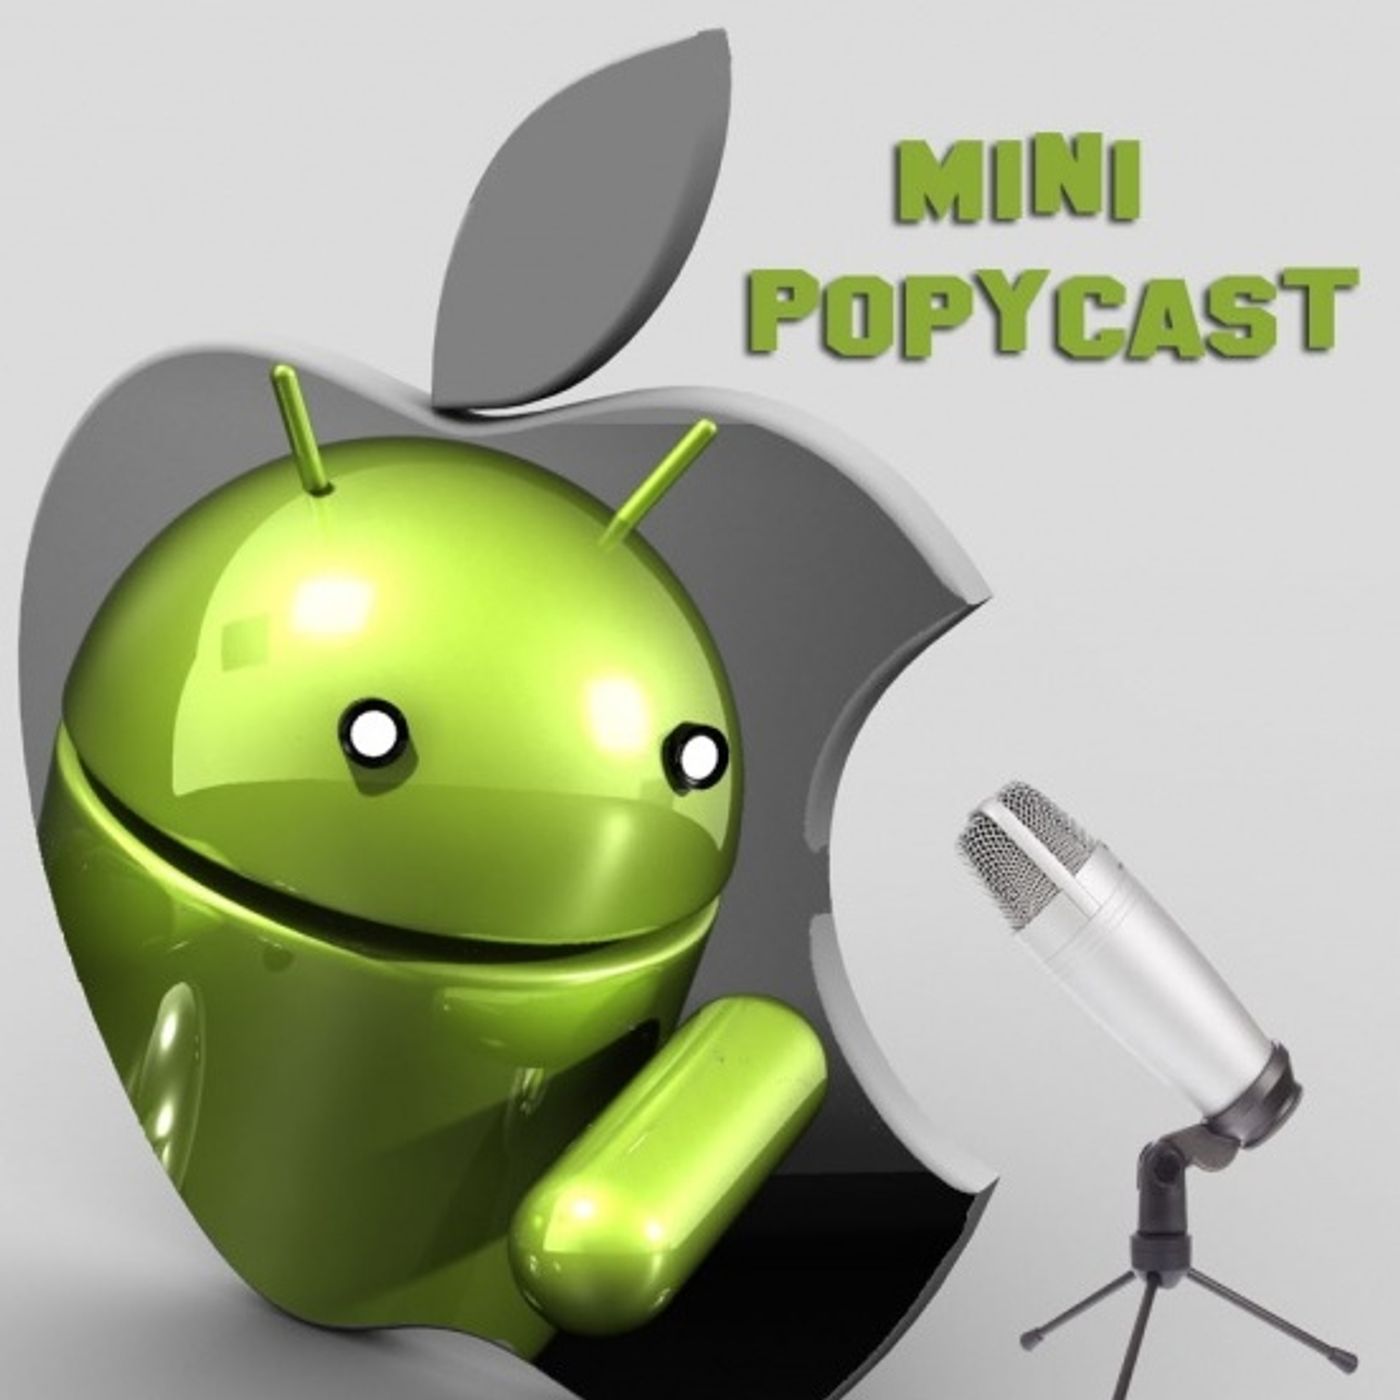 InterPodcast 2015- Minipopycast